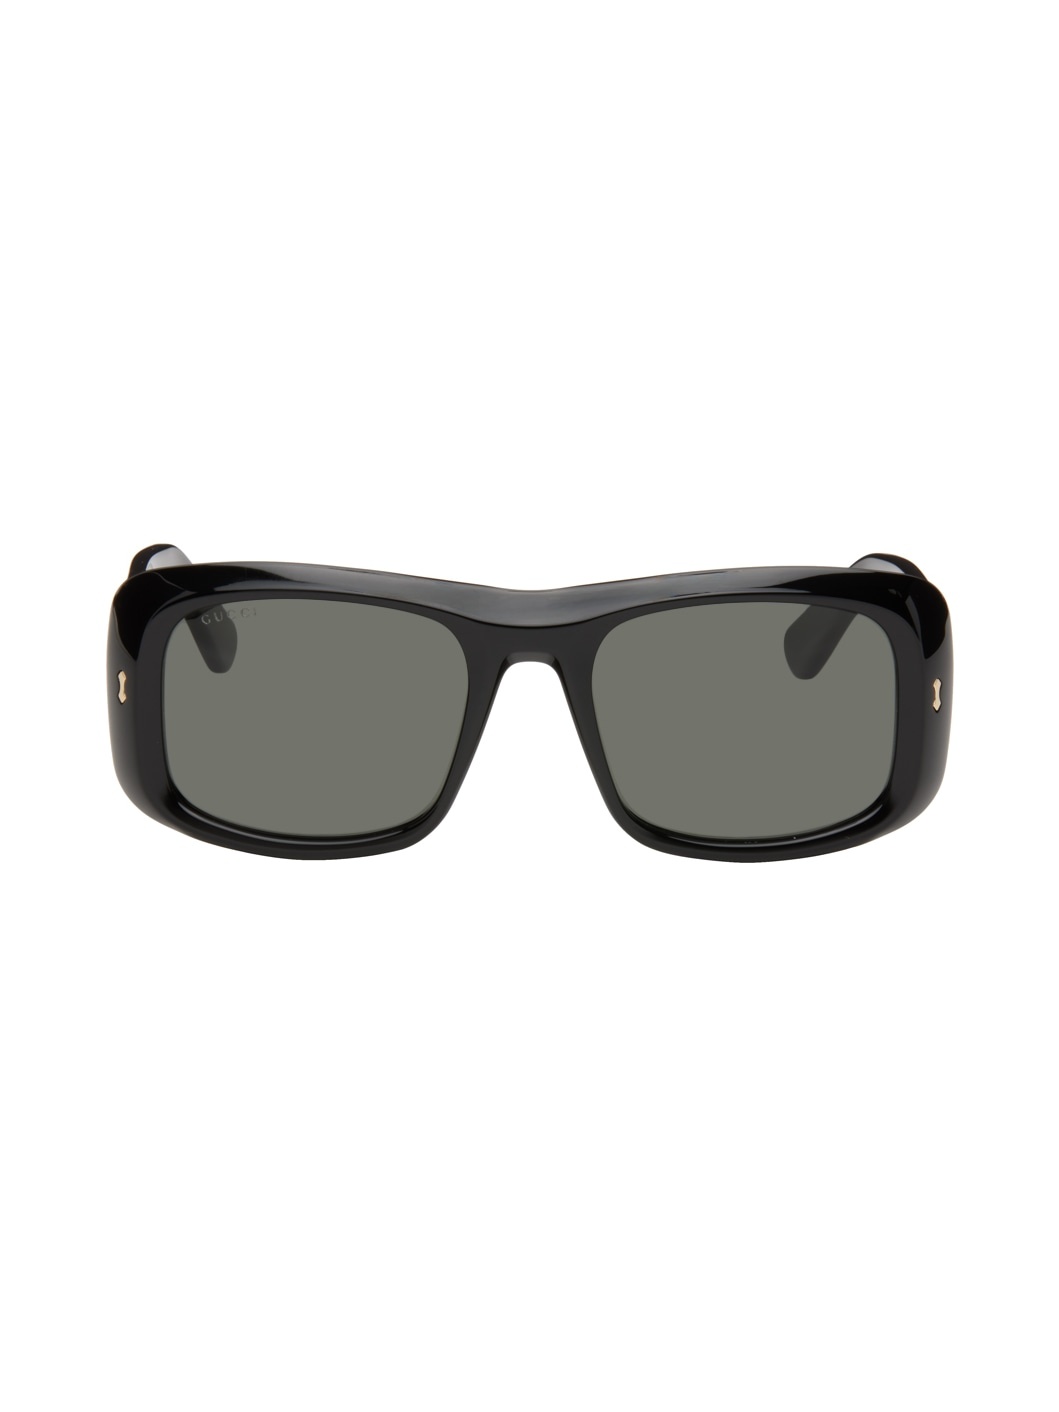 Black Square Sunglasses - 1